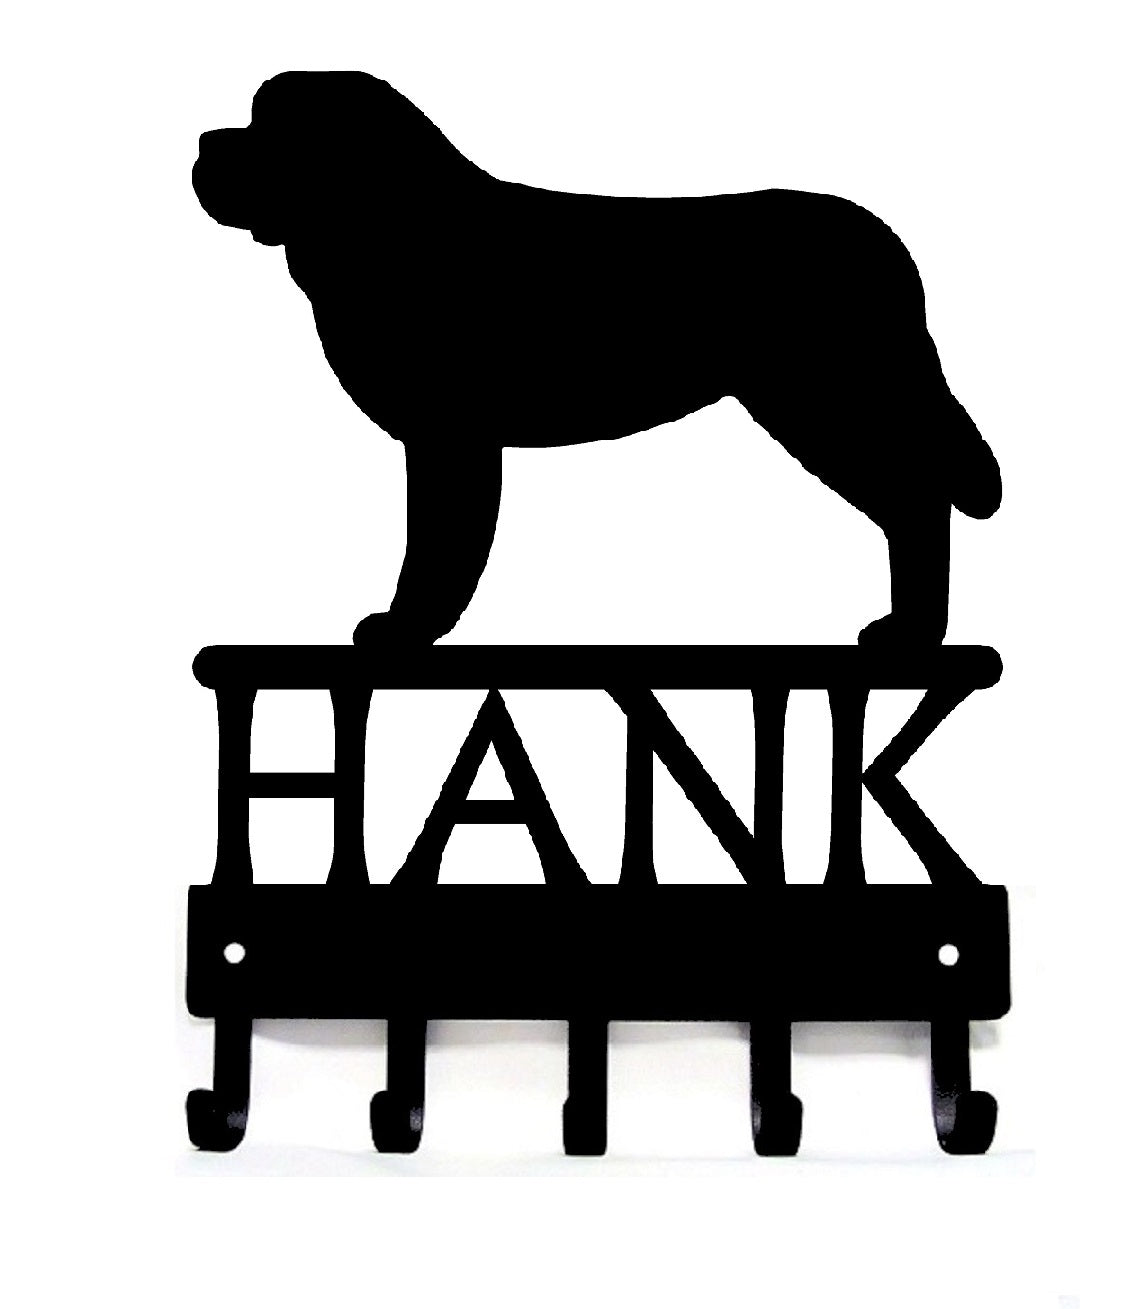 Saint Bernard Dog Key Holder Leash Hanger with Personalized Name - The Metal Peddler Key Rack breed, Breed S, Dog, key rack, leash hanger, personalized, Personalized Gifts, personalizetext, Saint Bernard, St Bernard